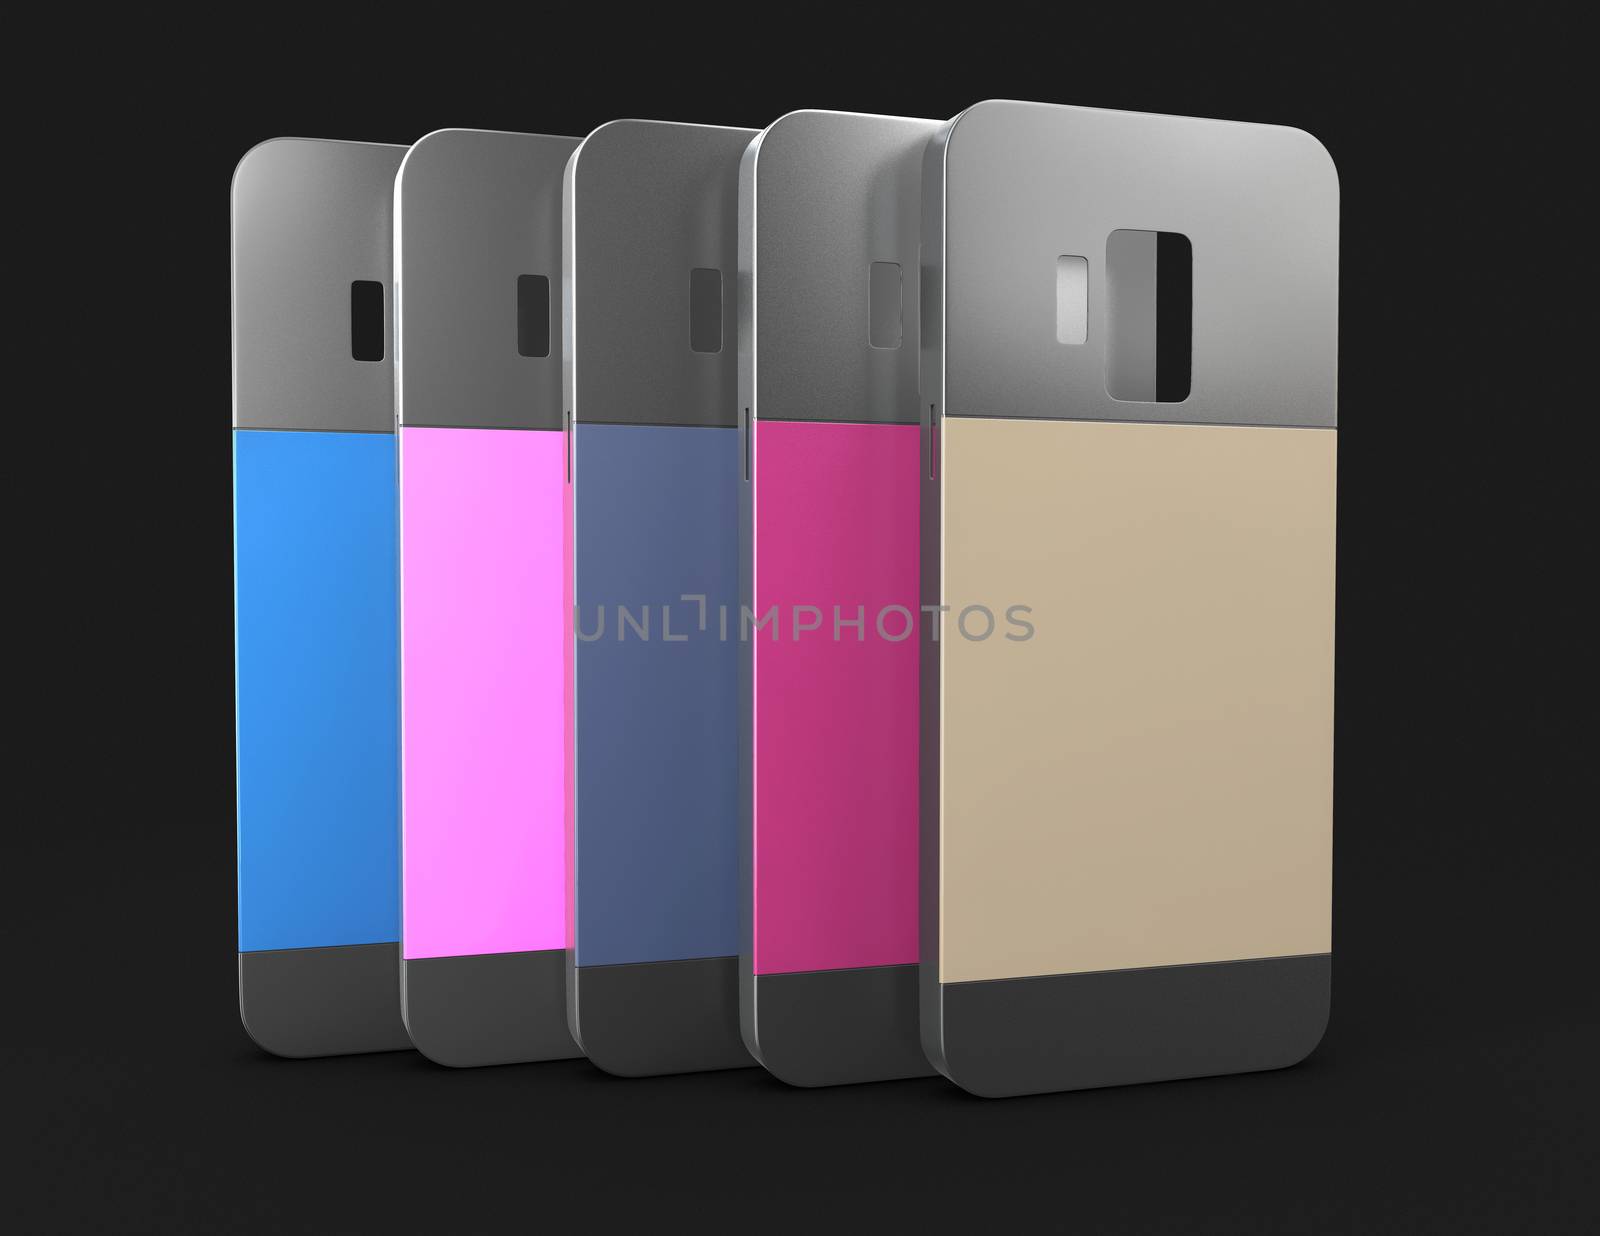 3d Illustration of smartphone back covers on a black background.